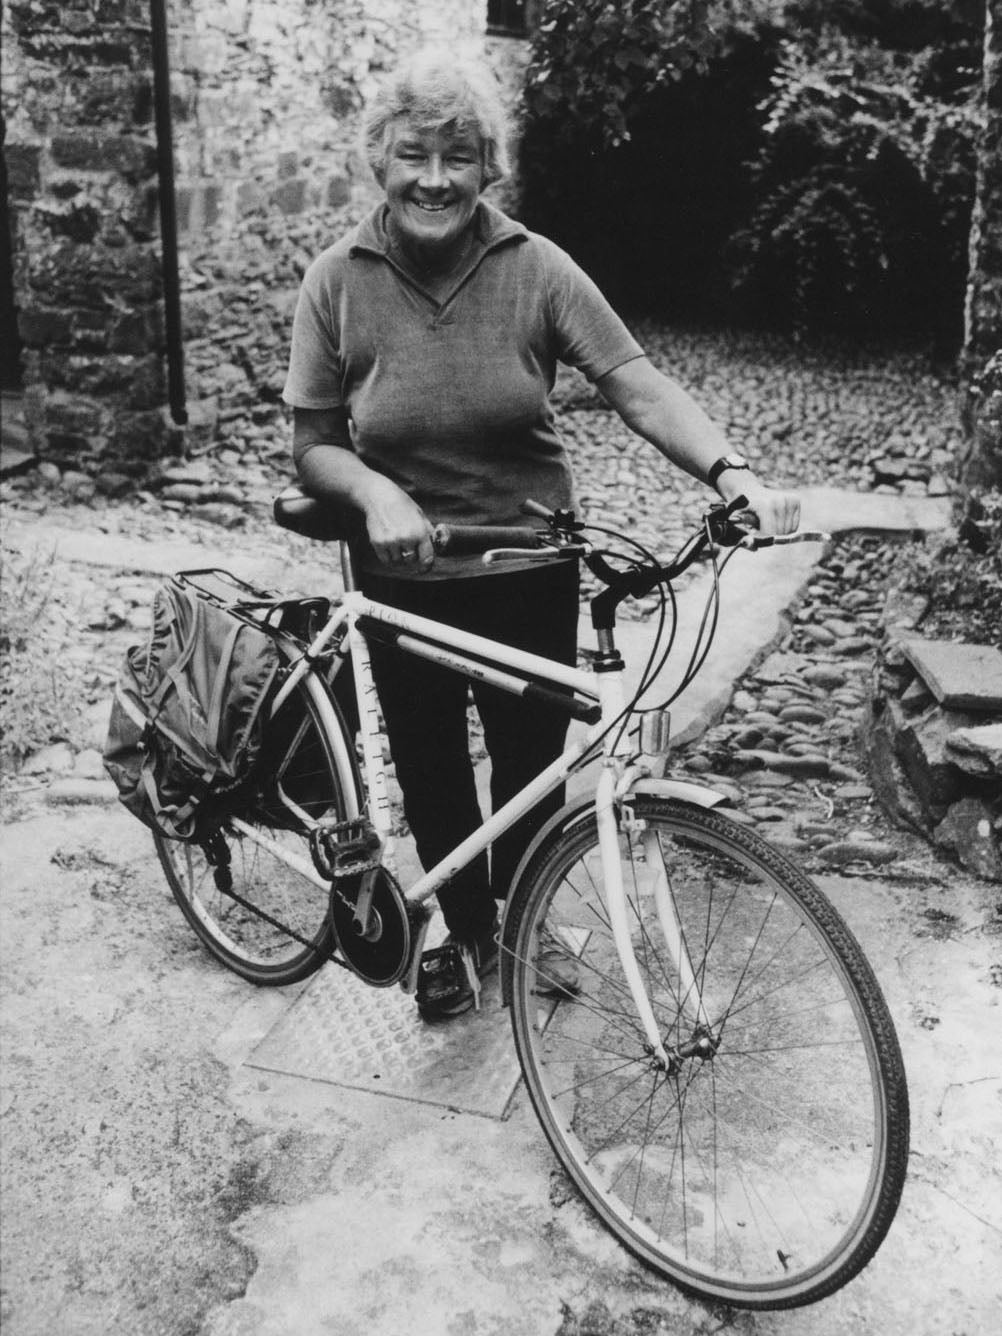 Dervla with her trusty bike in 1994